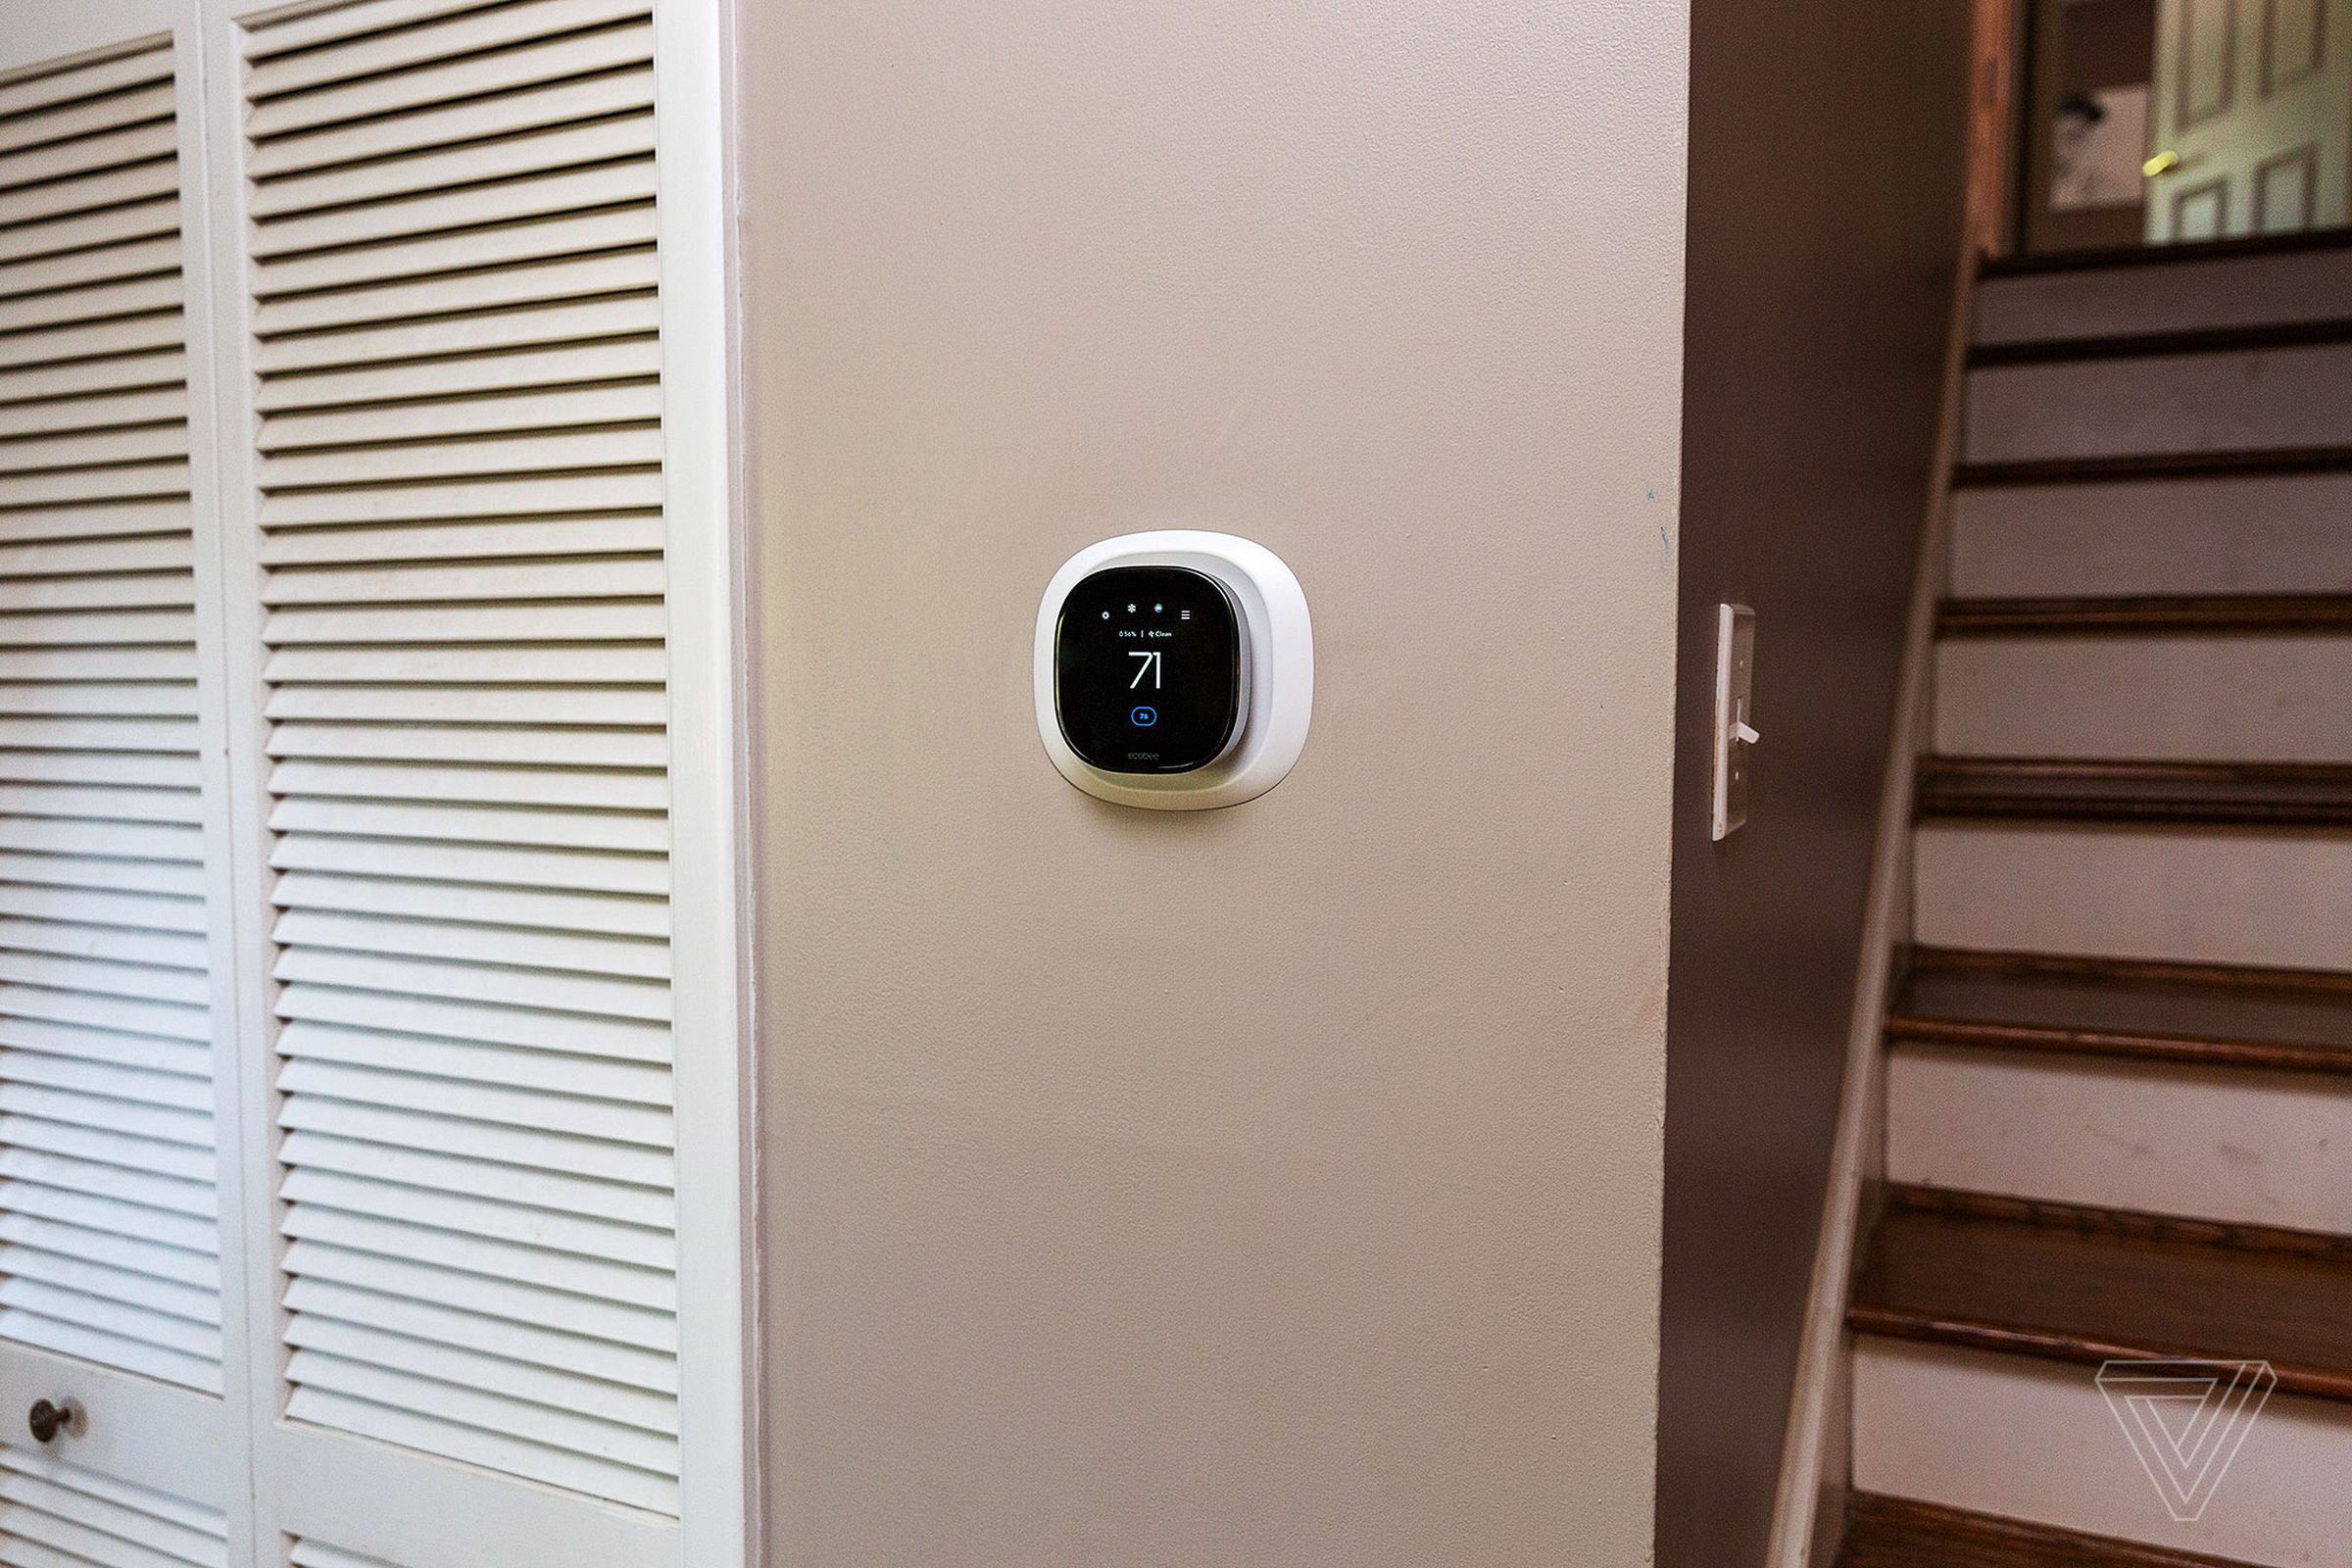 Termostat Ecobee berukuran kecil di dinding cokelat muda, terletak di antara lemari dan tangga.